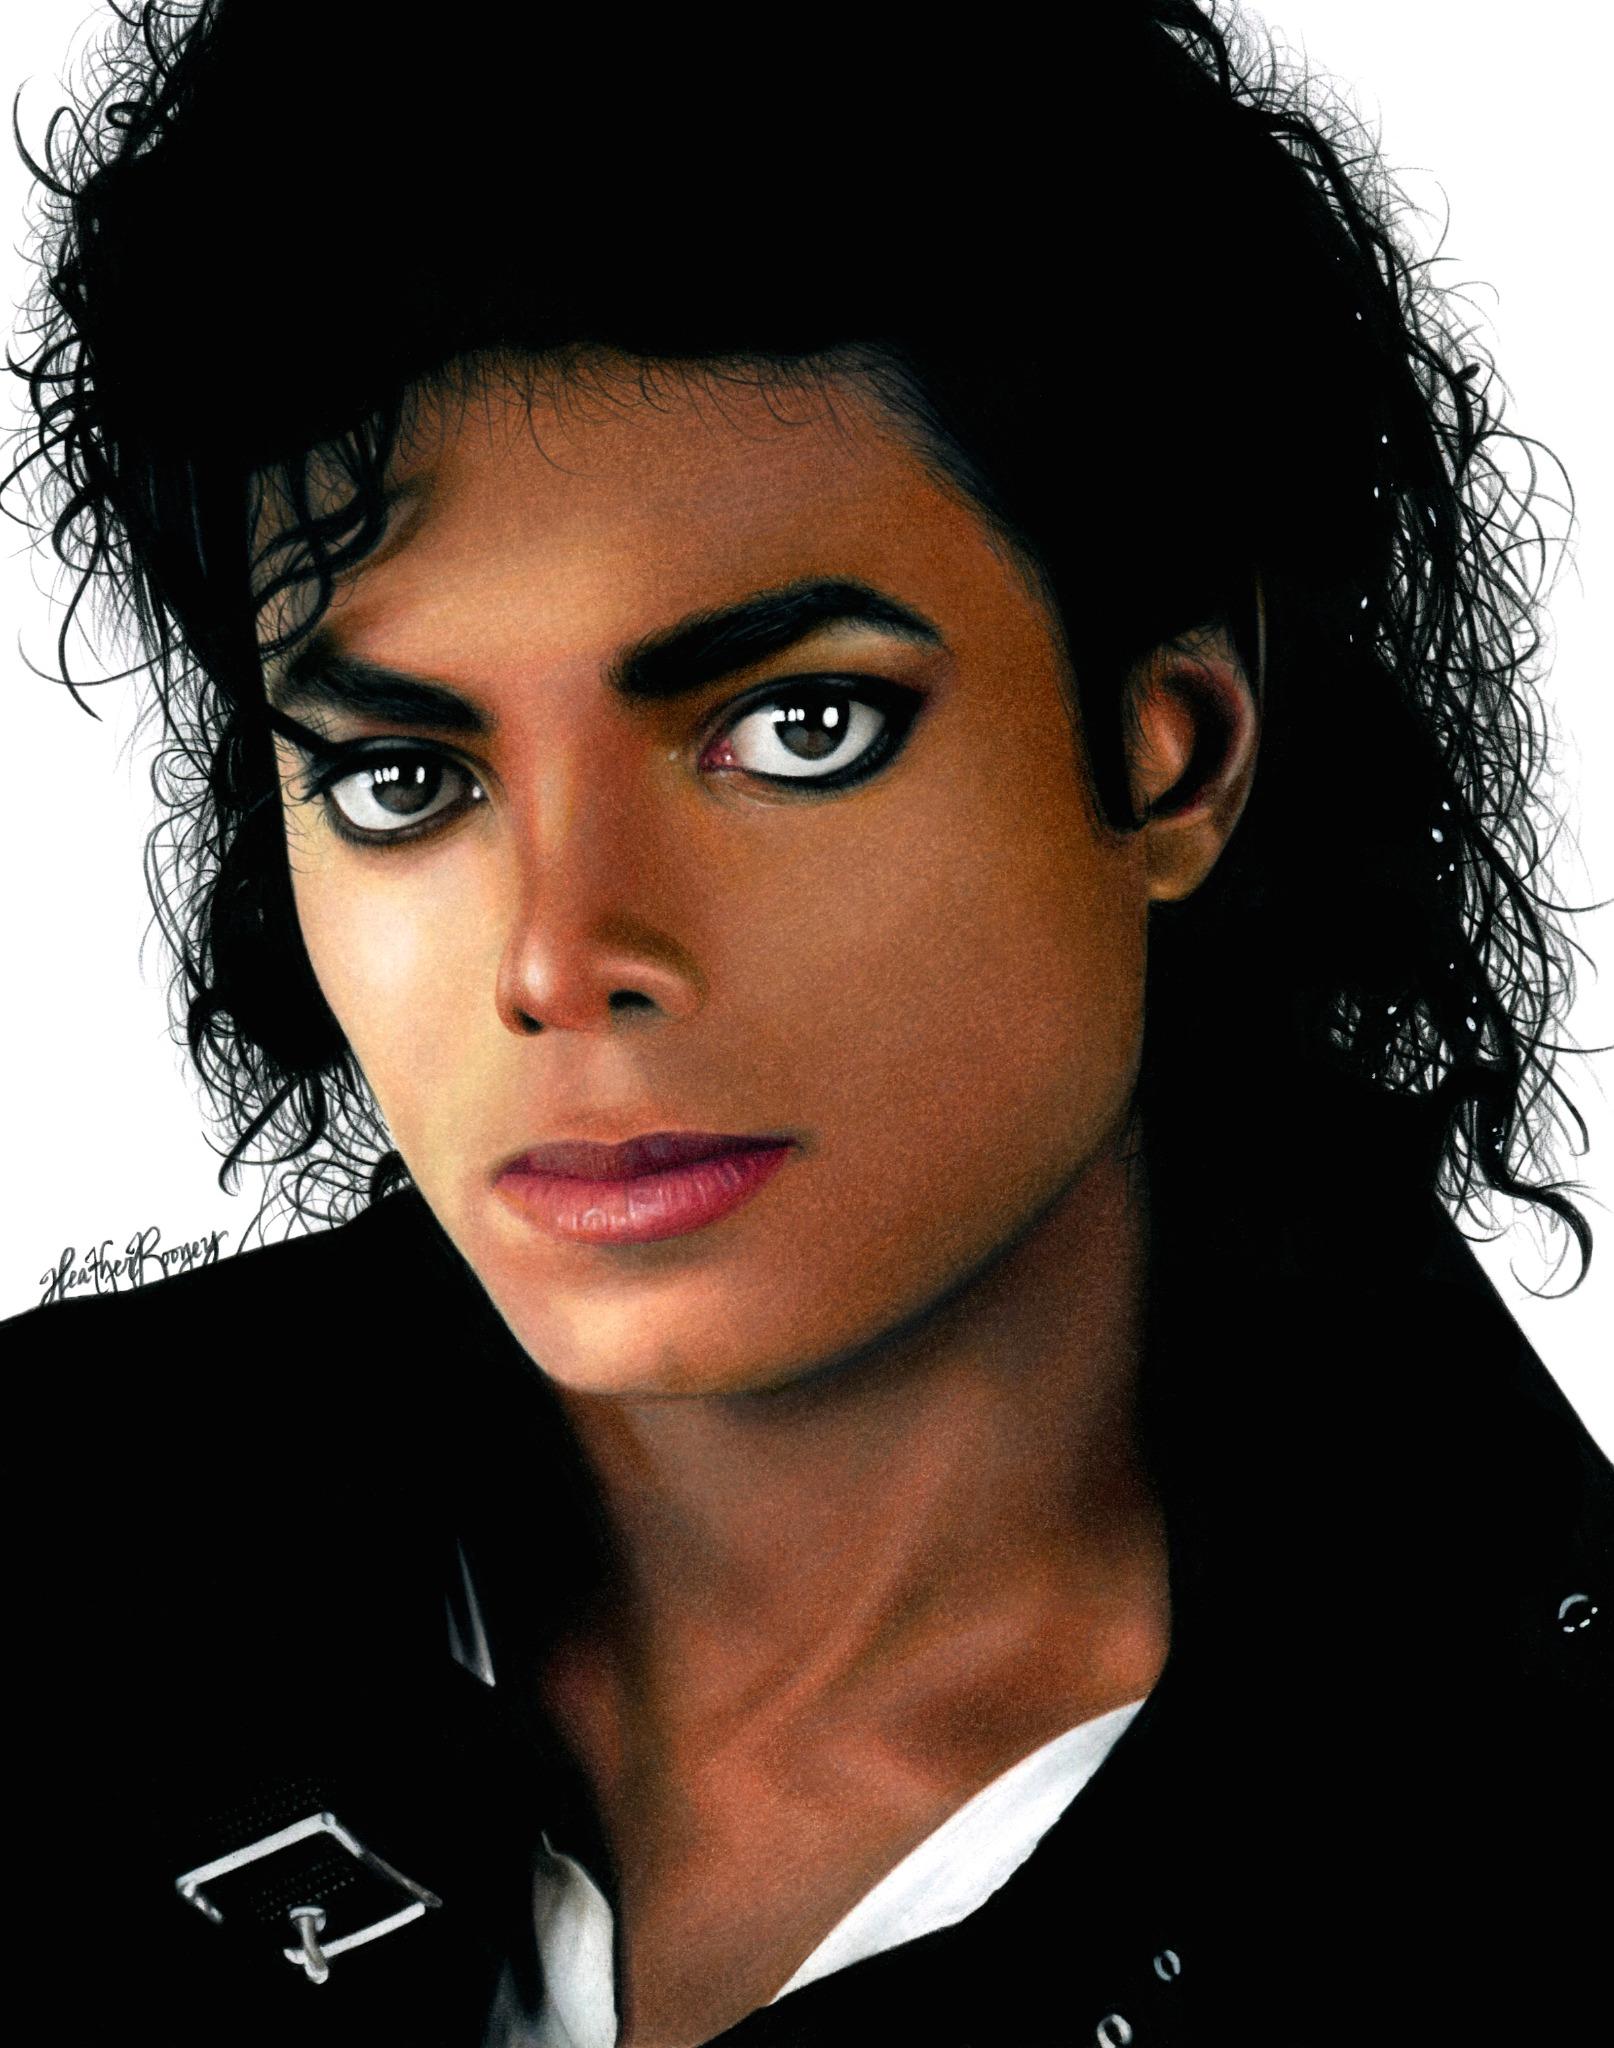 Michael Jackson Hat Drawing by David Lloyd Glover - Pixels